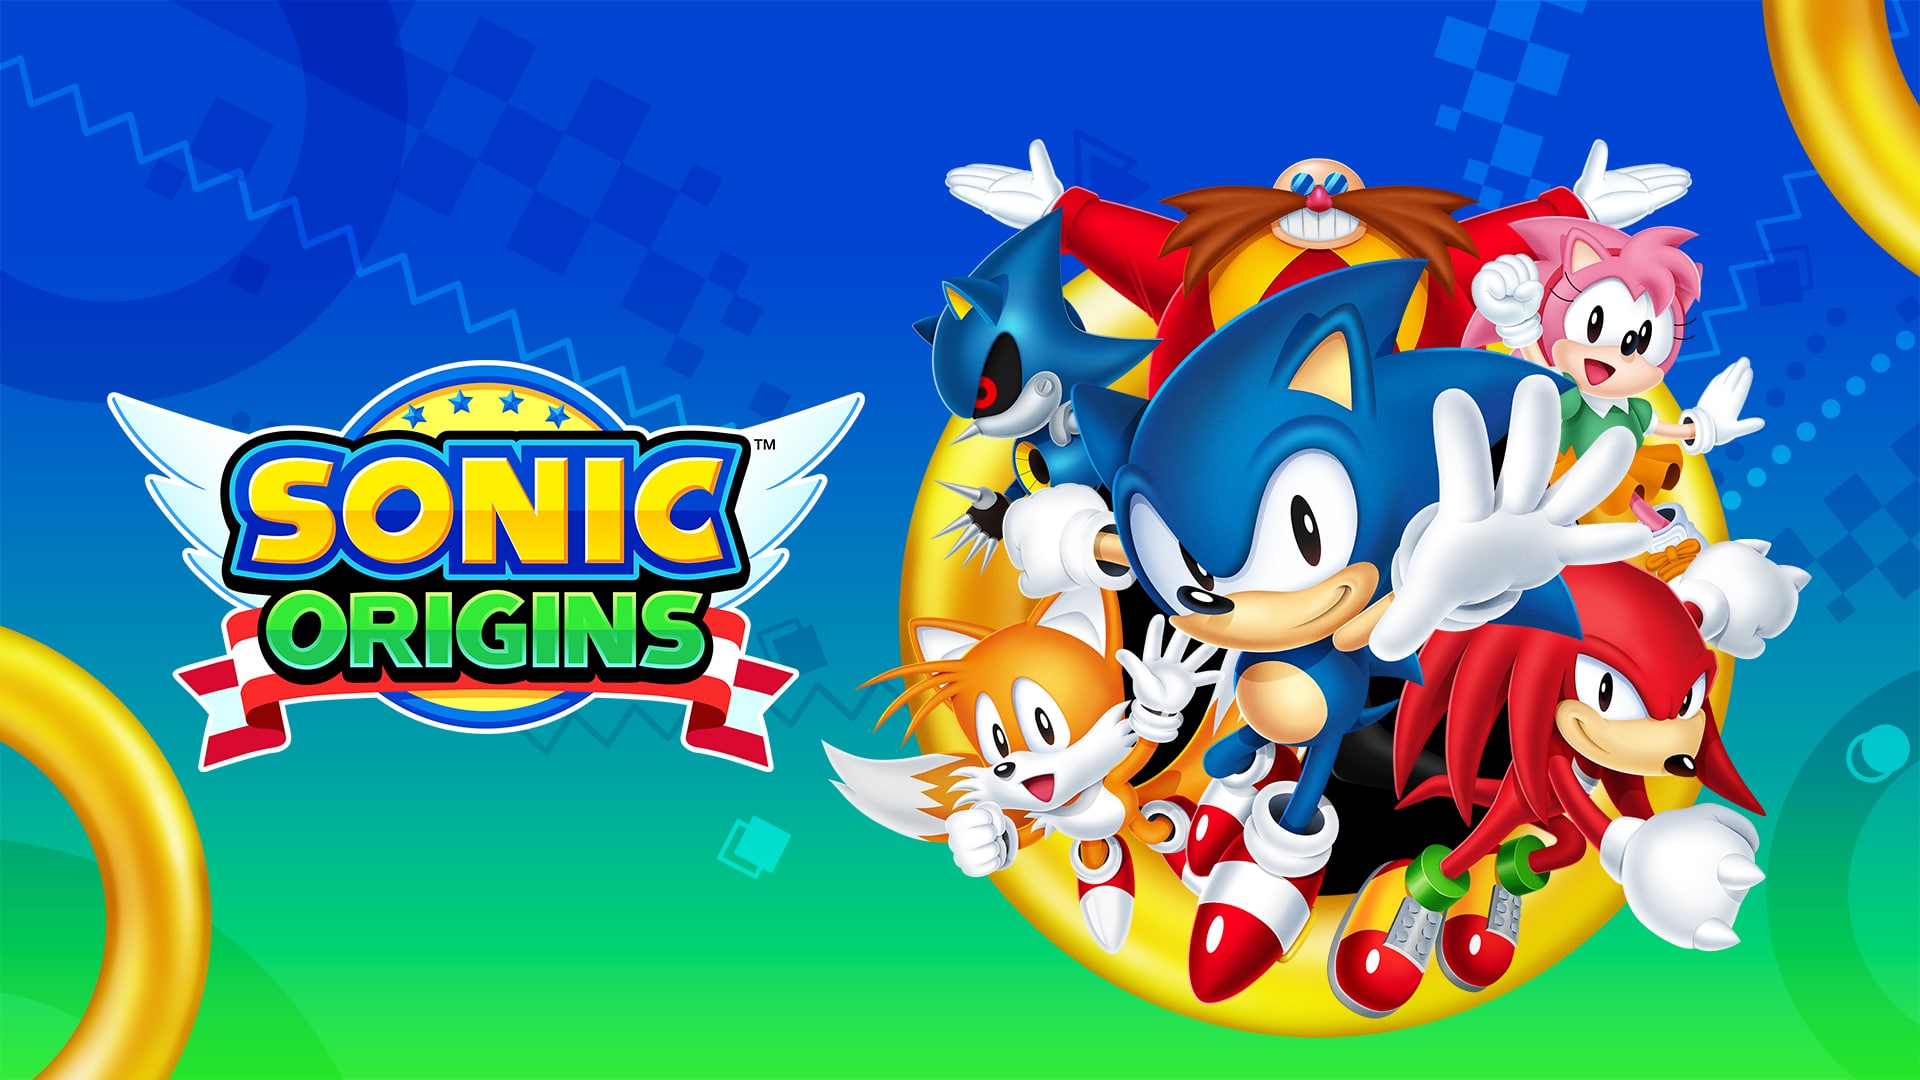 Sonic Origins release date, price, trailer, pre-order DLC and more